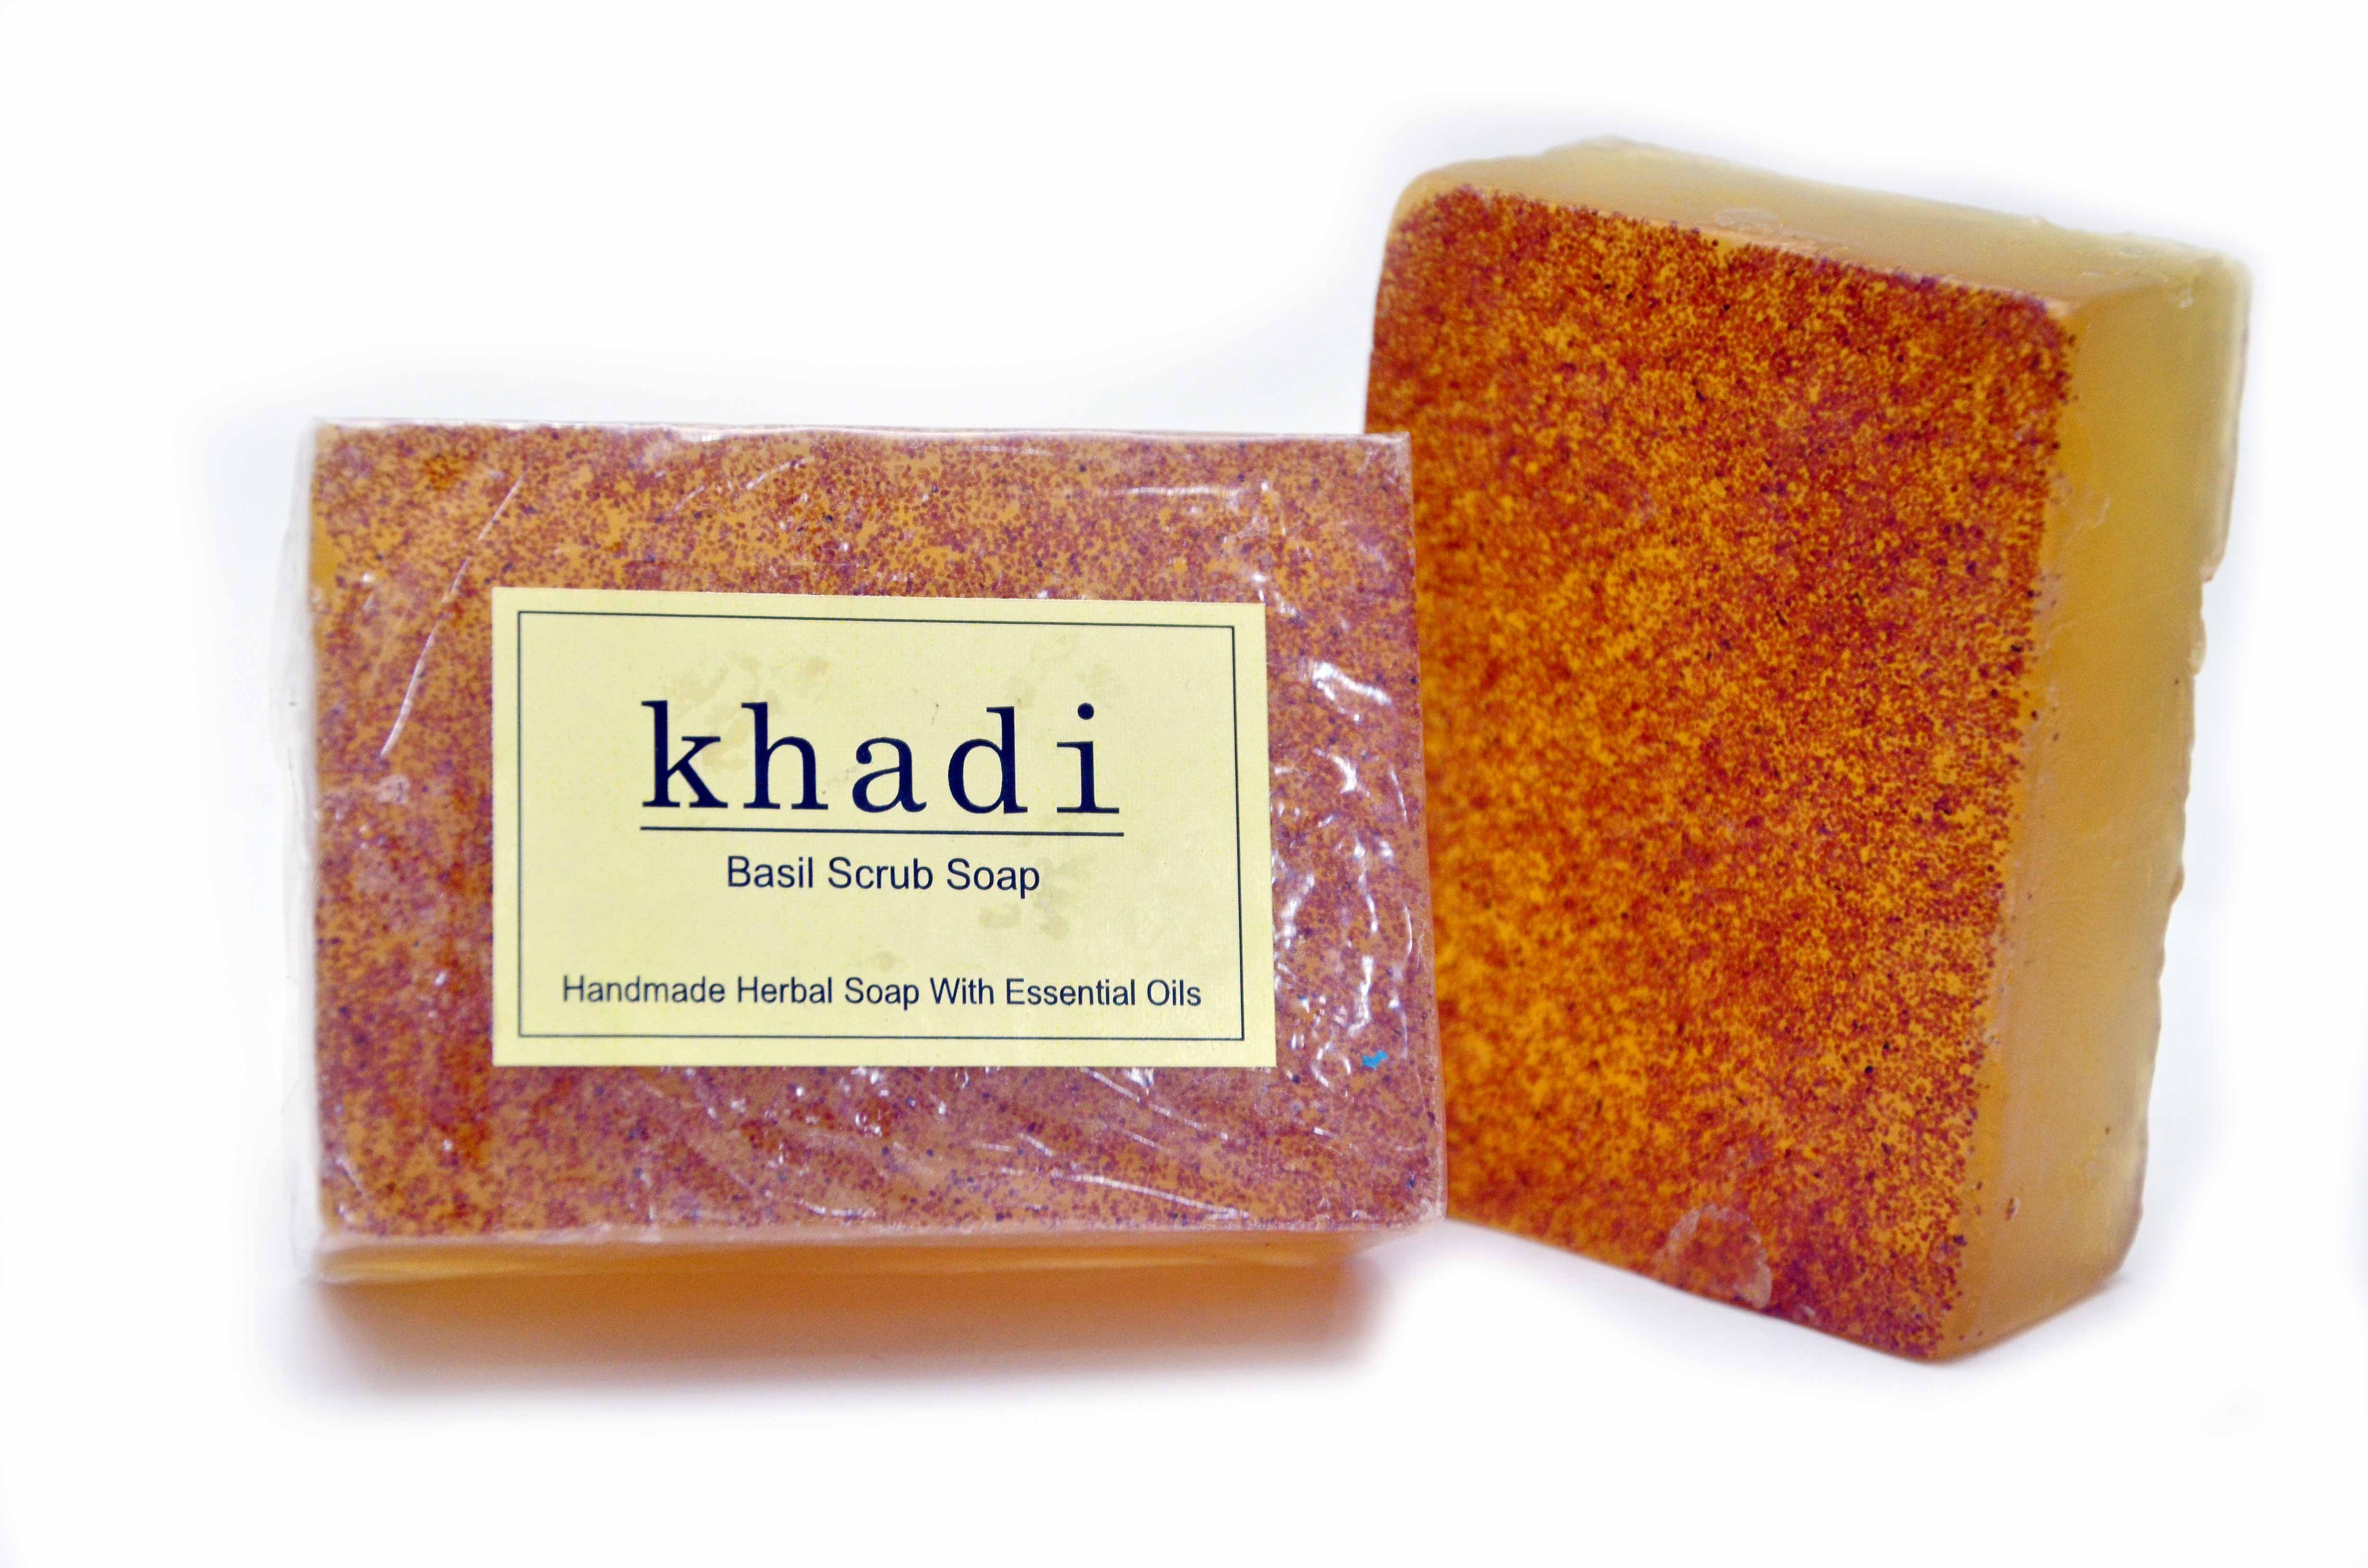 Buy Vagad's Khadi Basil Scrub Soap at Best Price Online